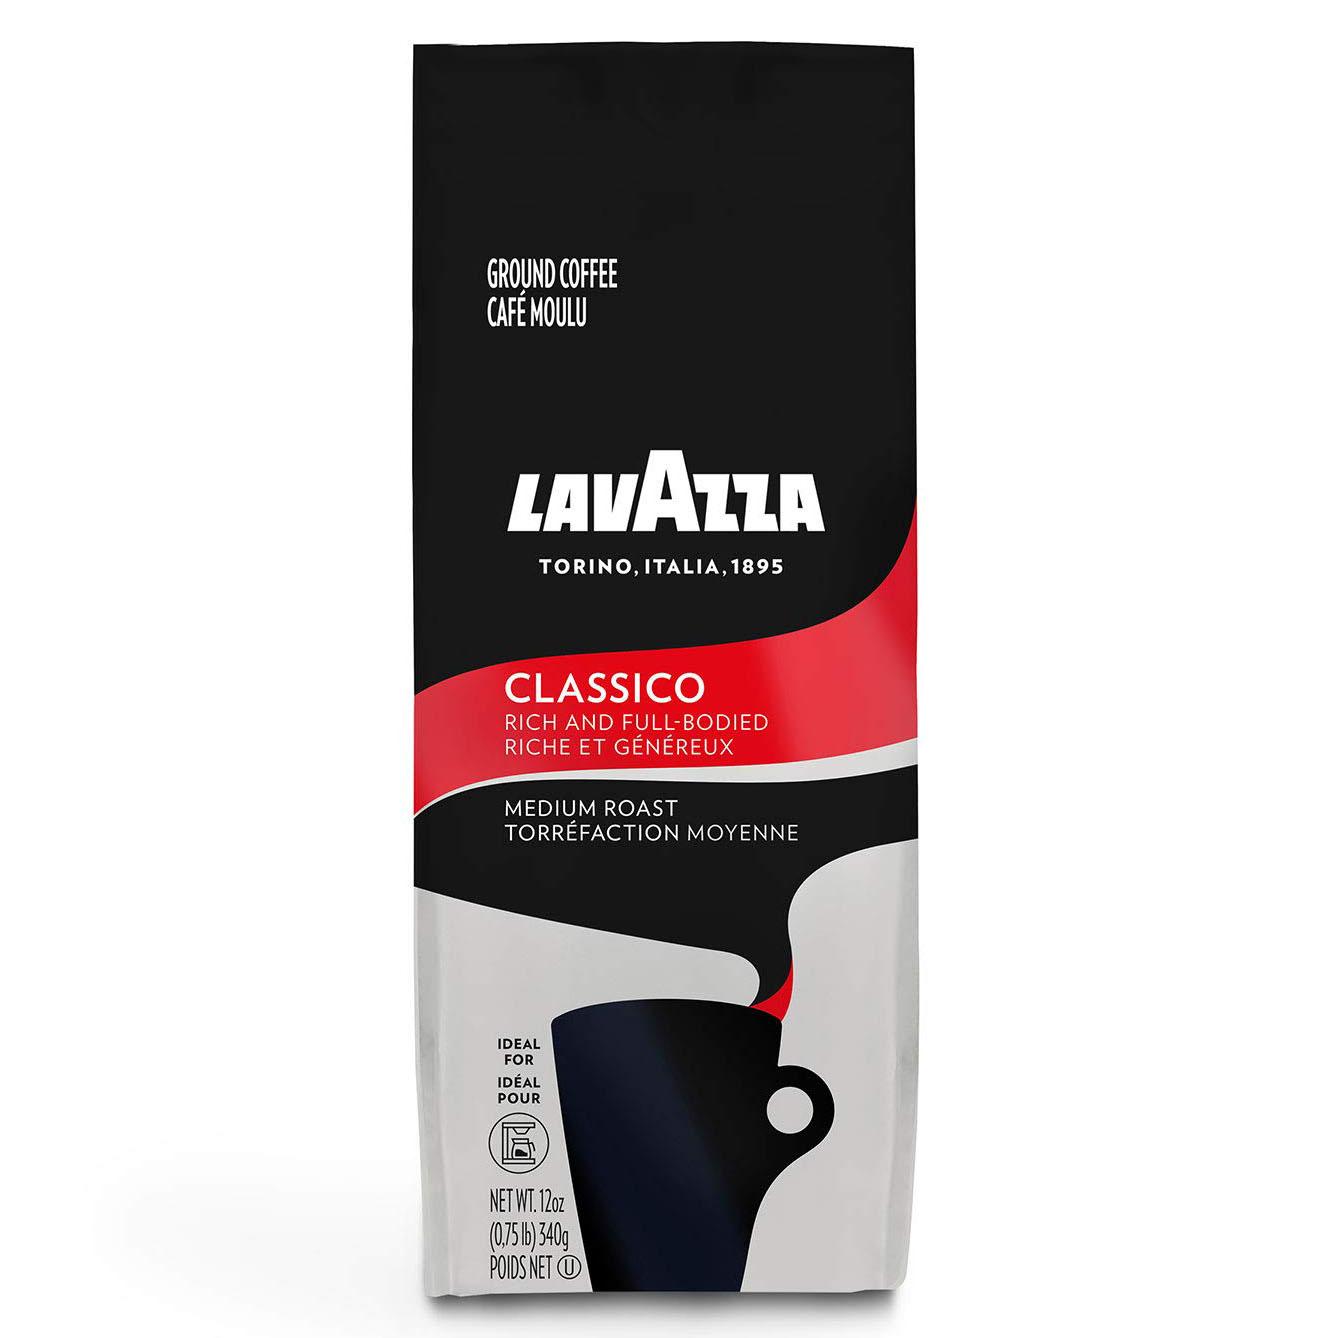 6 Lavazza Classico Medium Roast Ground Coffee Blend for $27.99 Shipped